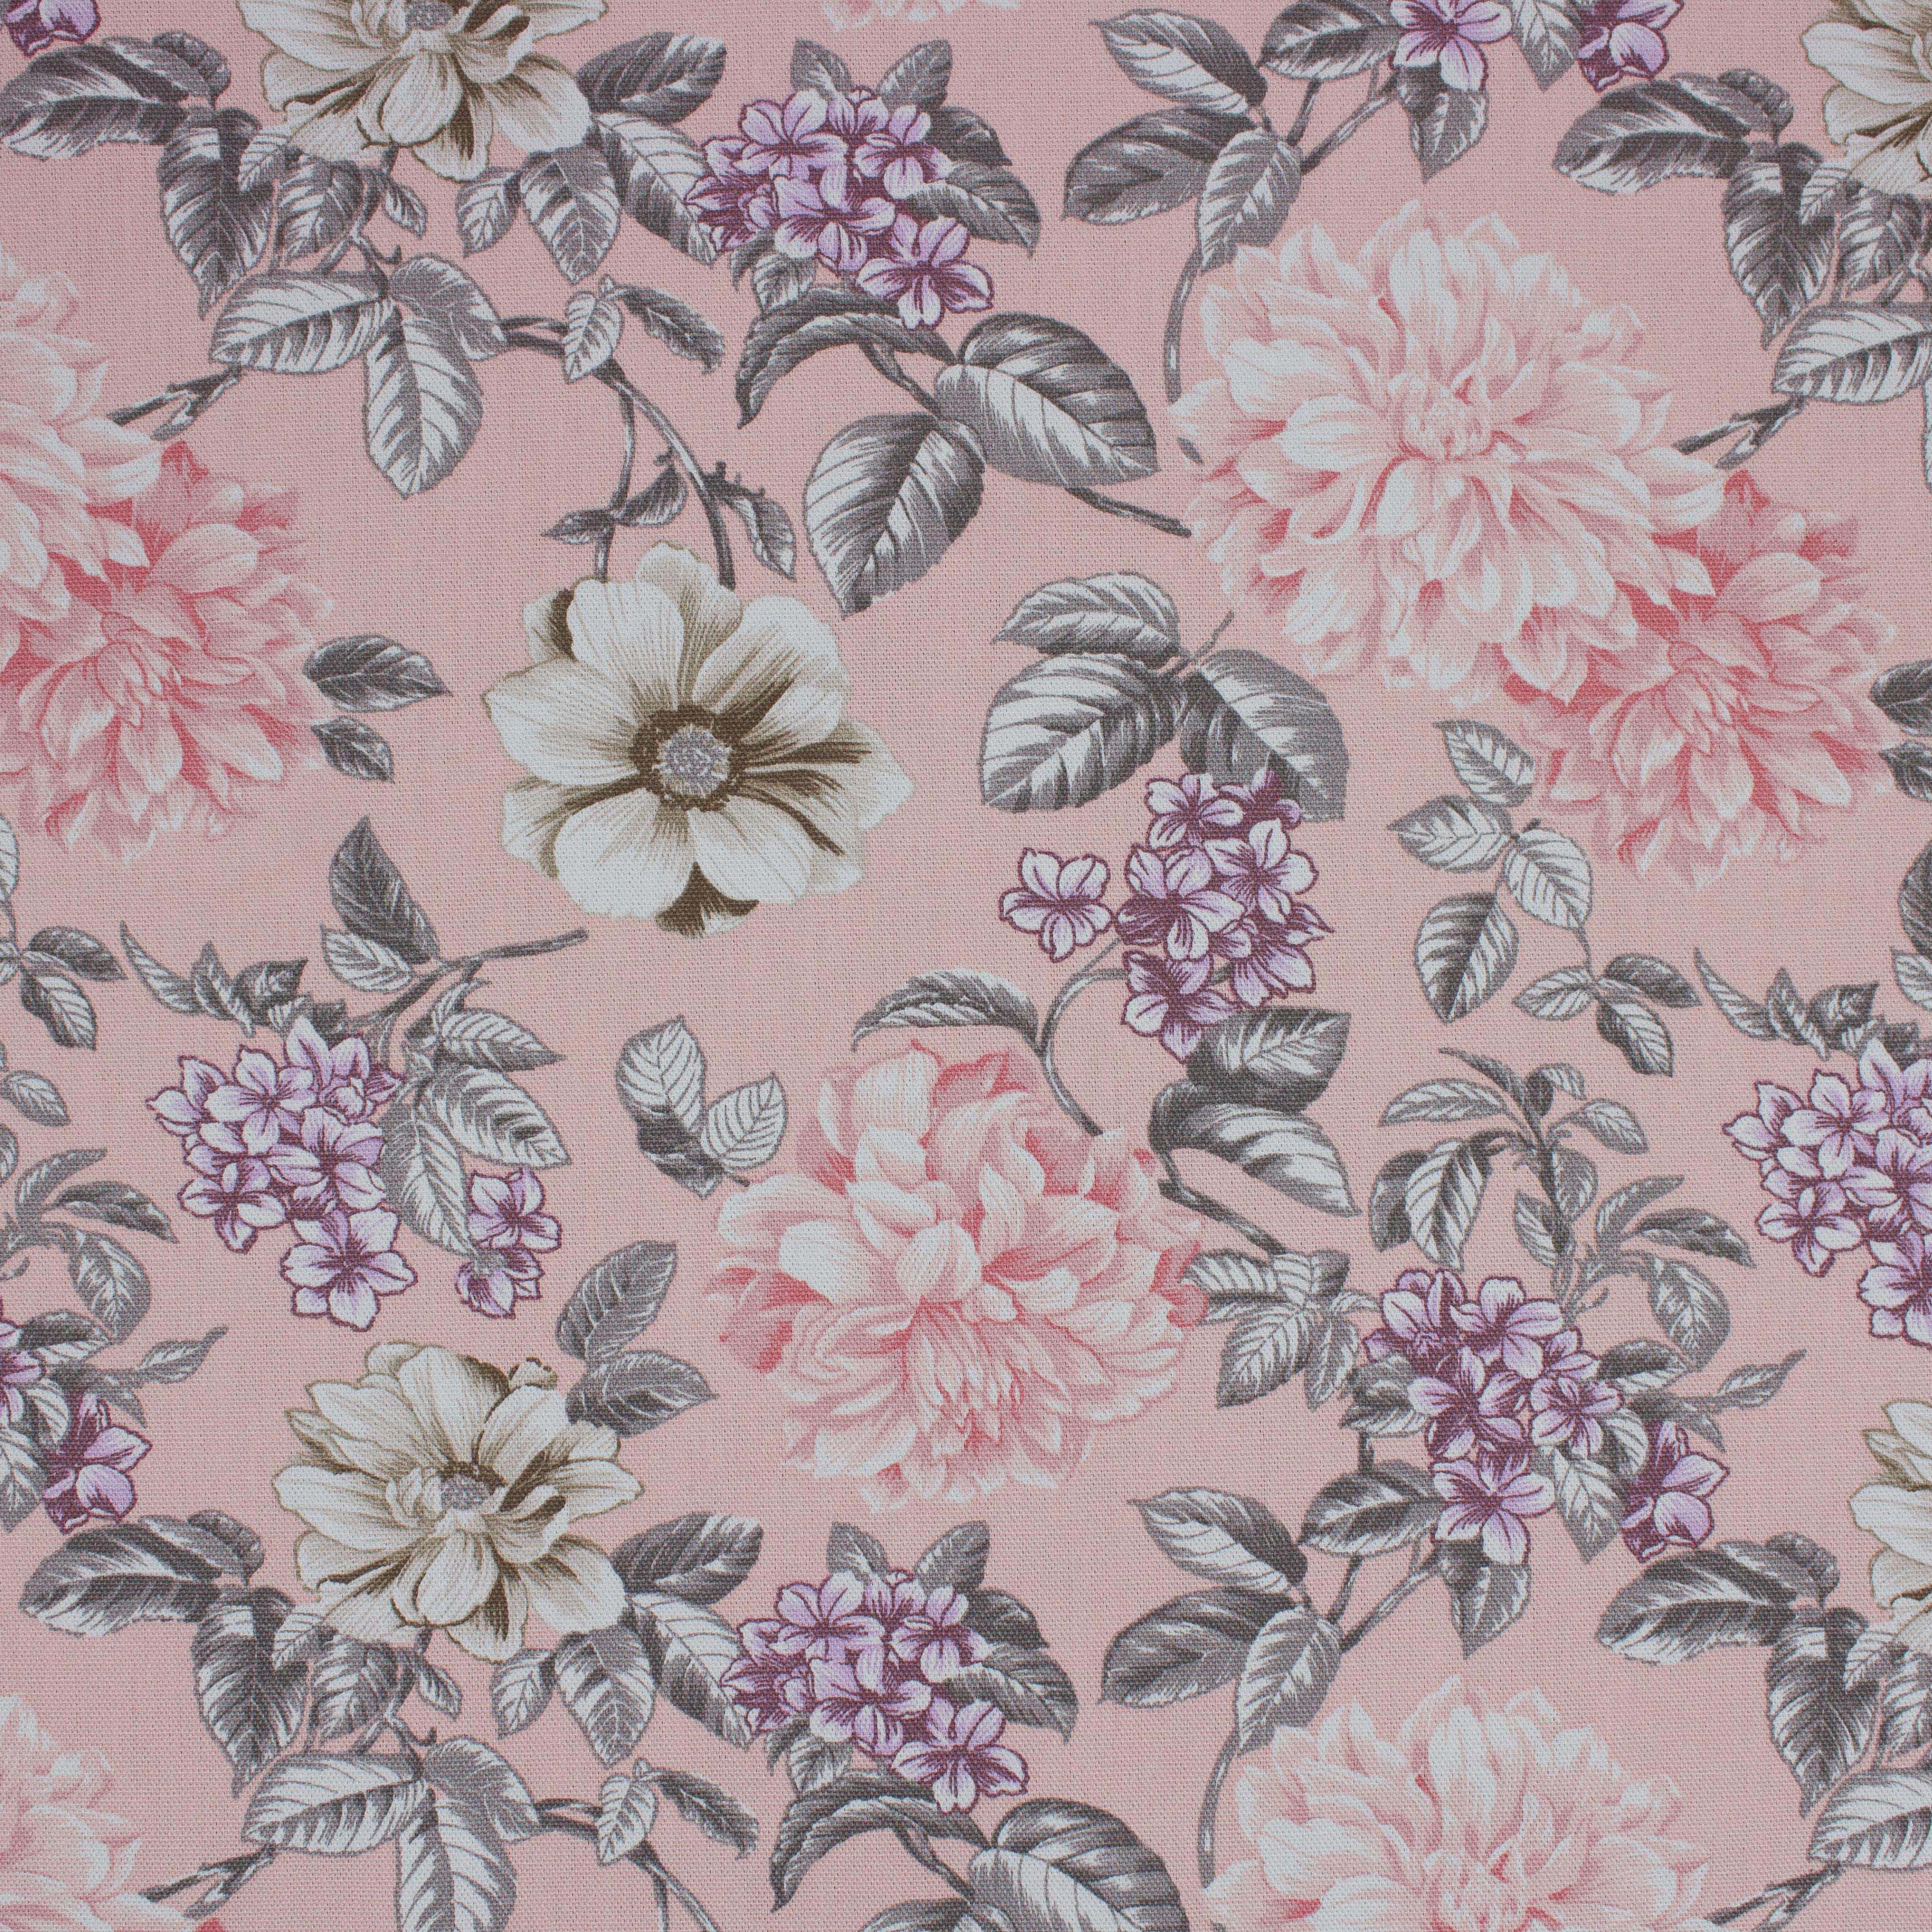 Better Homes & Gardens 100% Cotton Flower Garden Blush, 2 Yard Precut Fabric - image 1 of 6